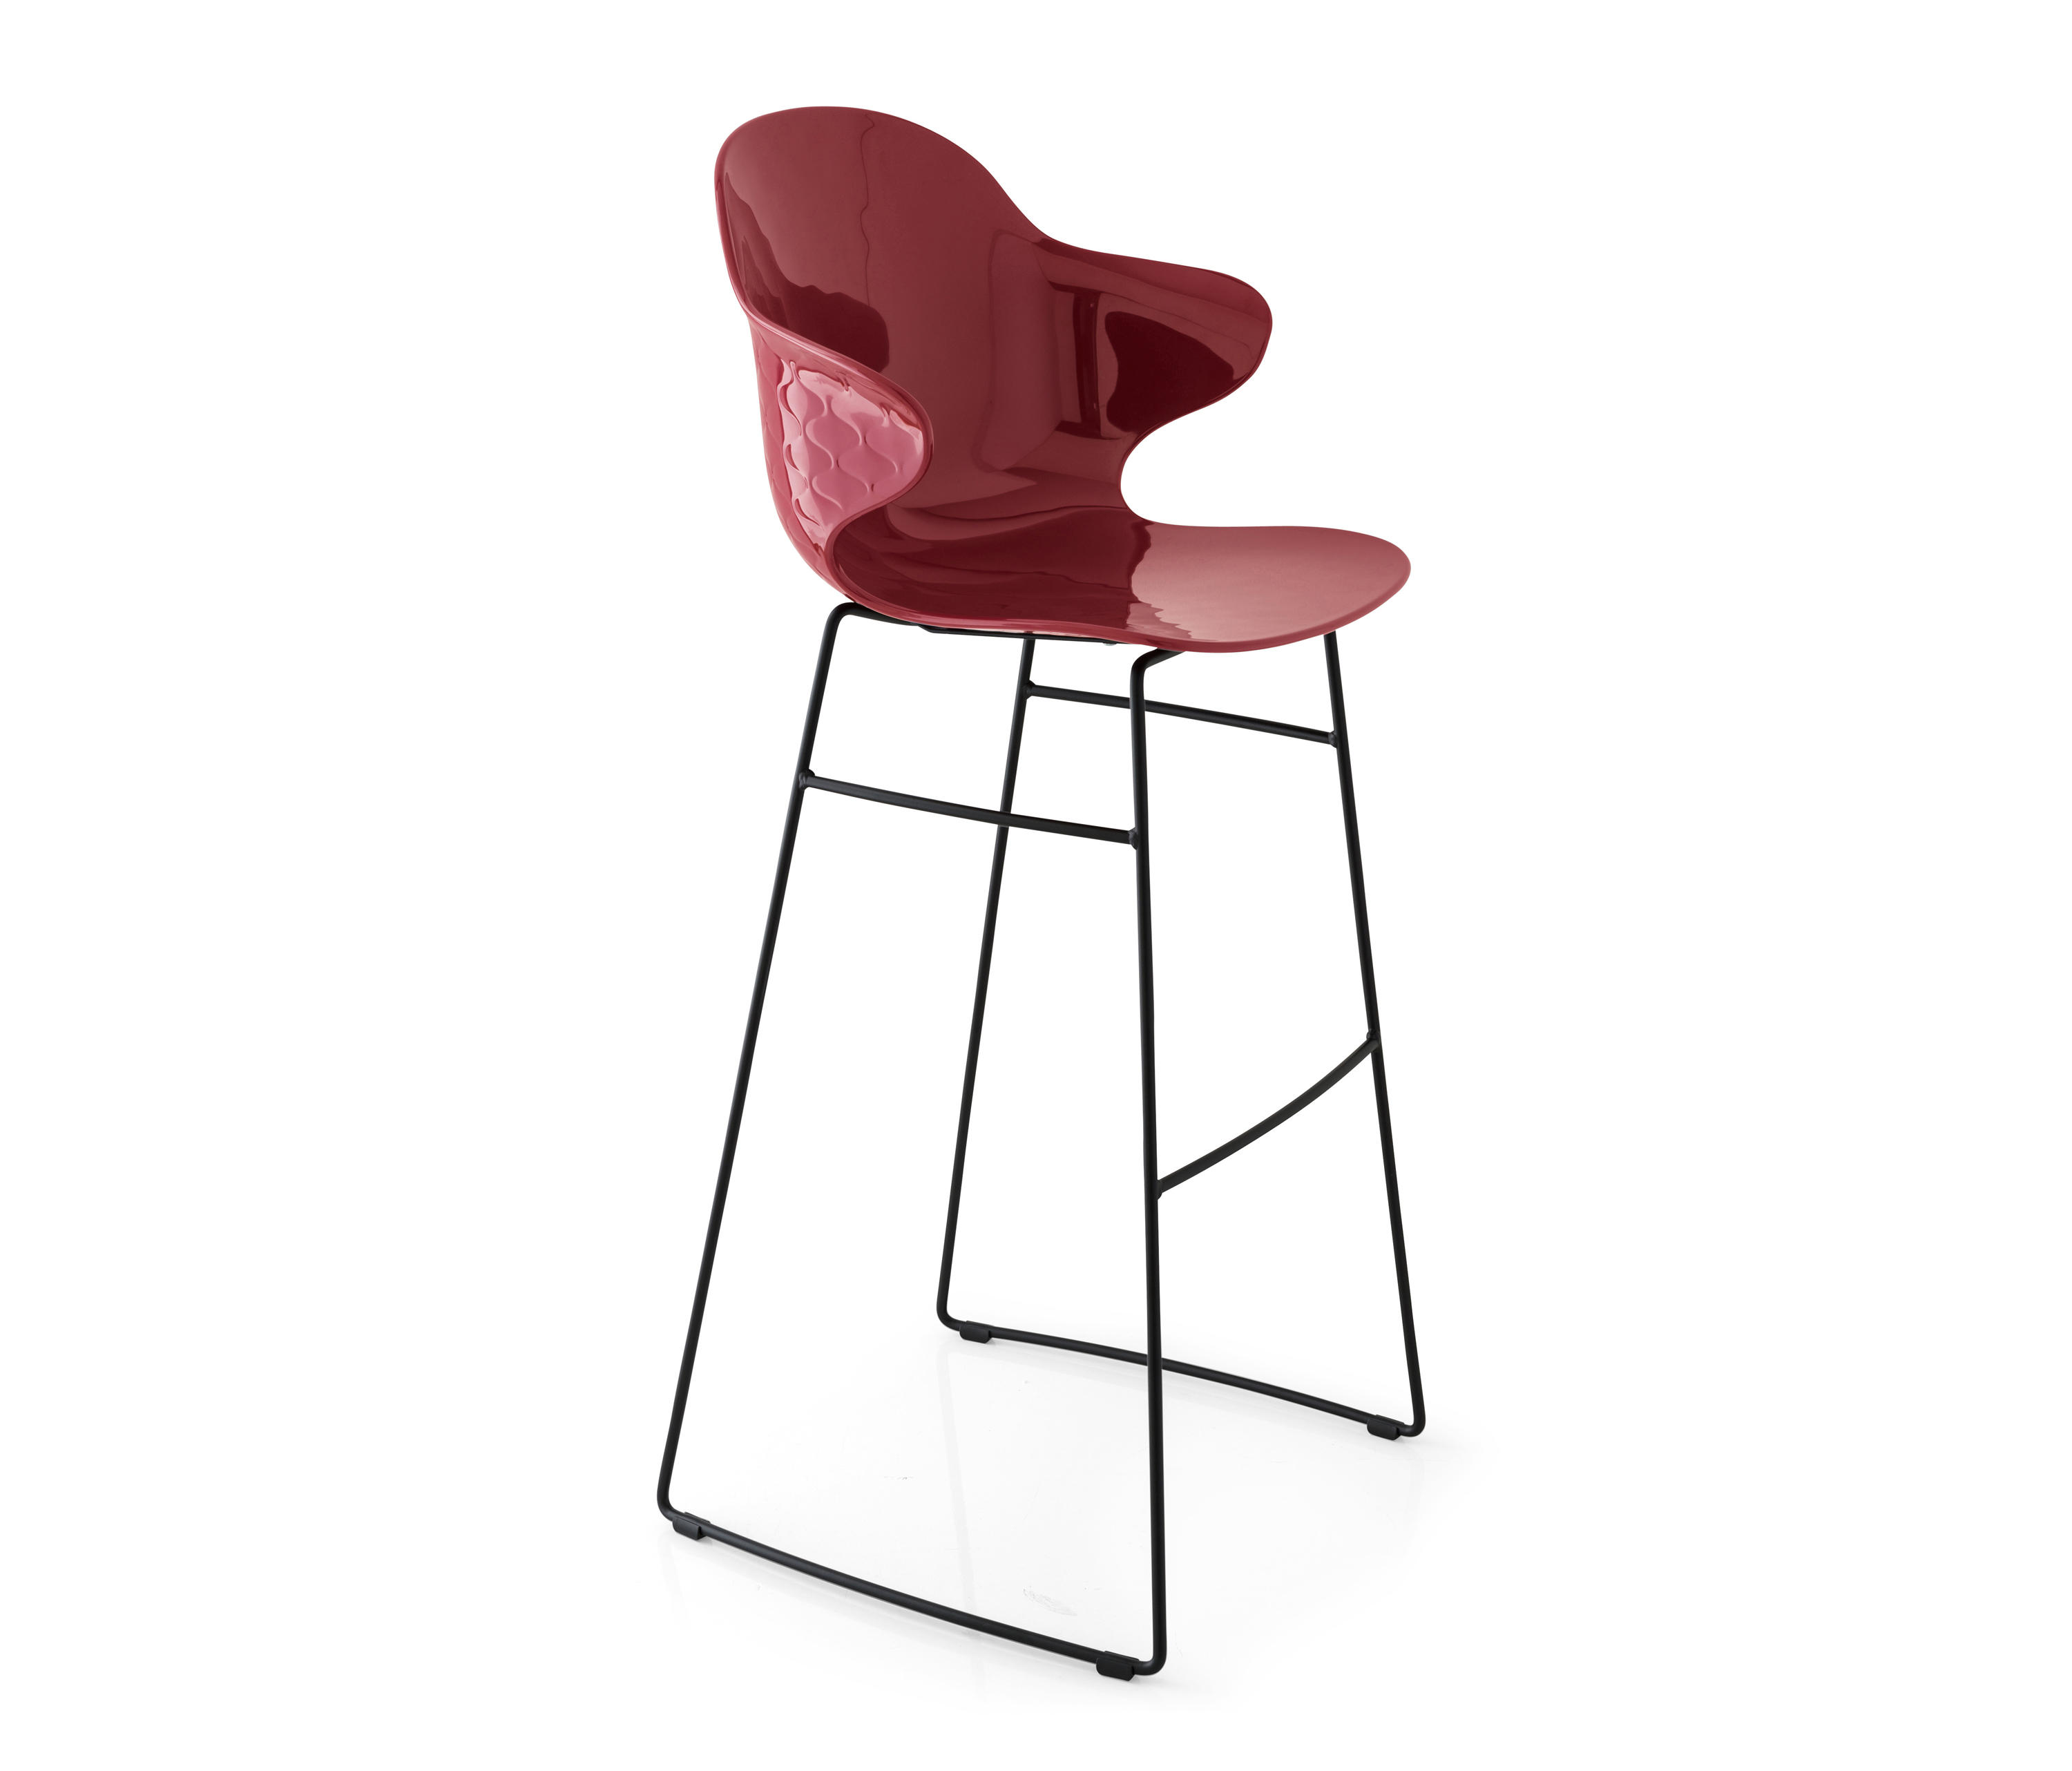 SAINT TROPEZ - Bar stools from Calligaris | Architonic